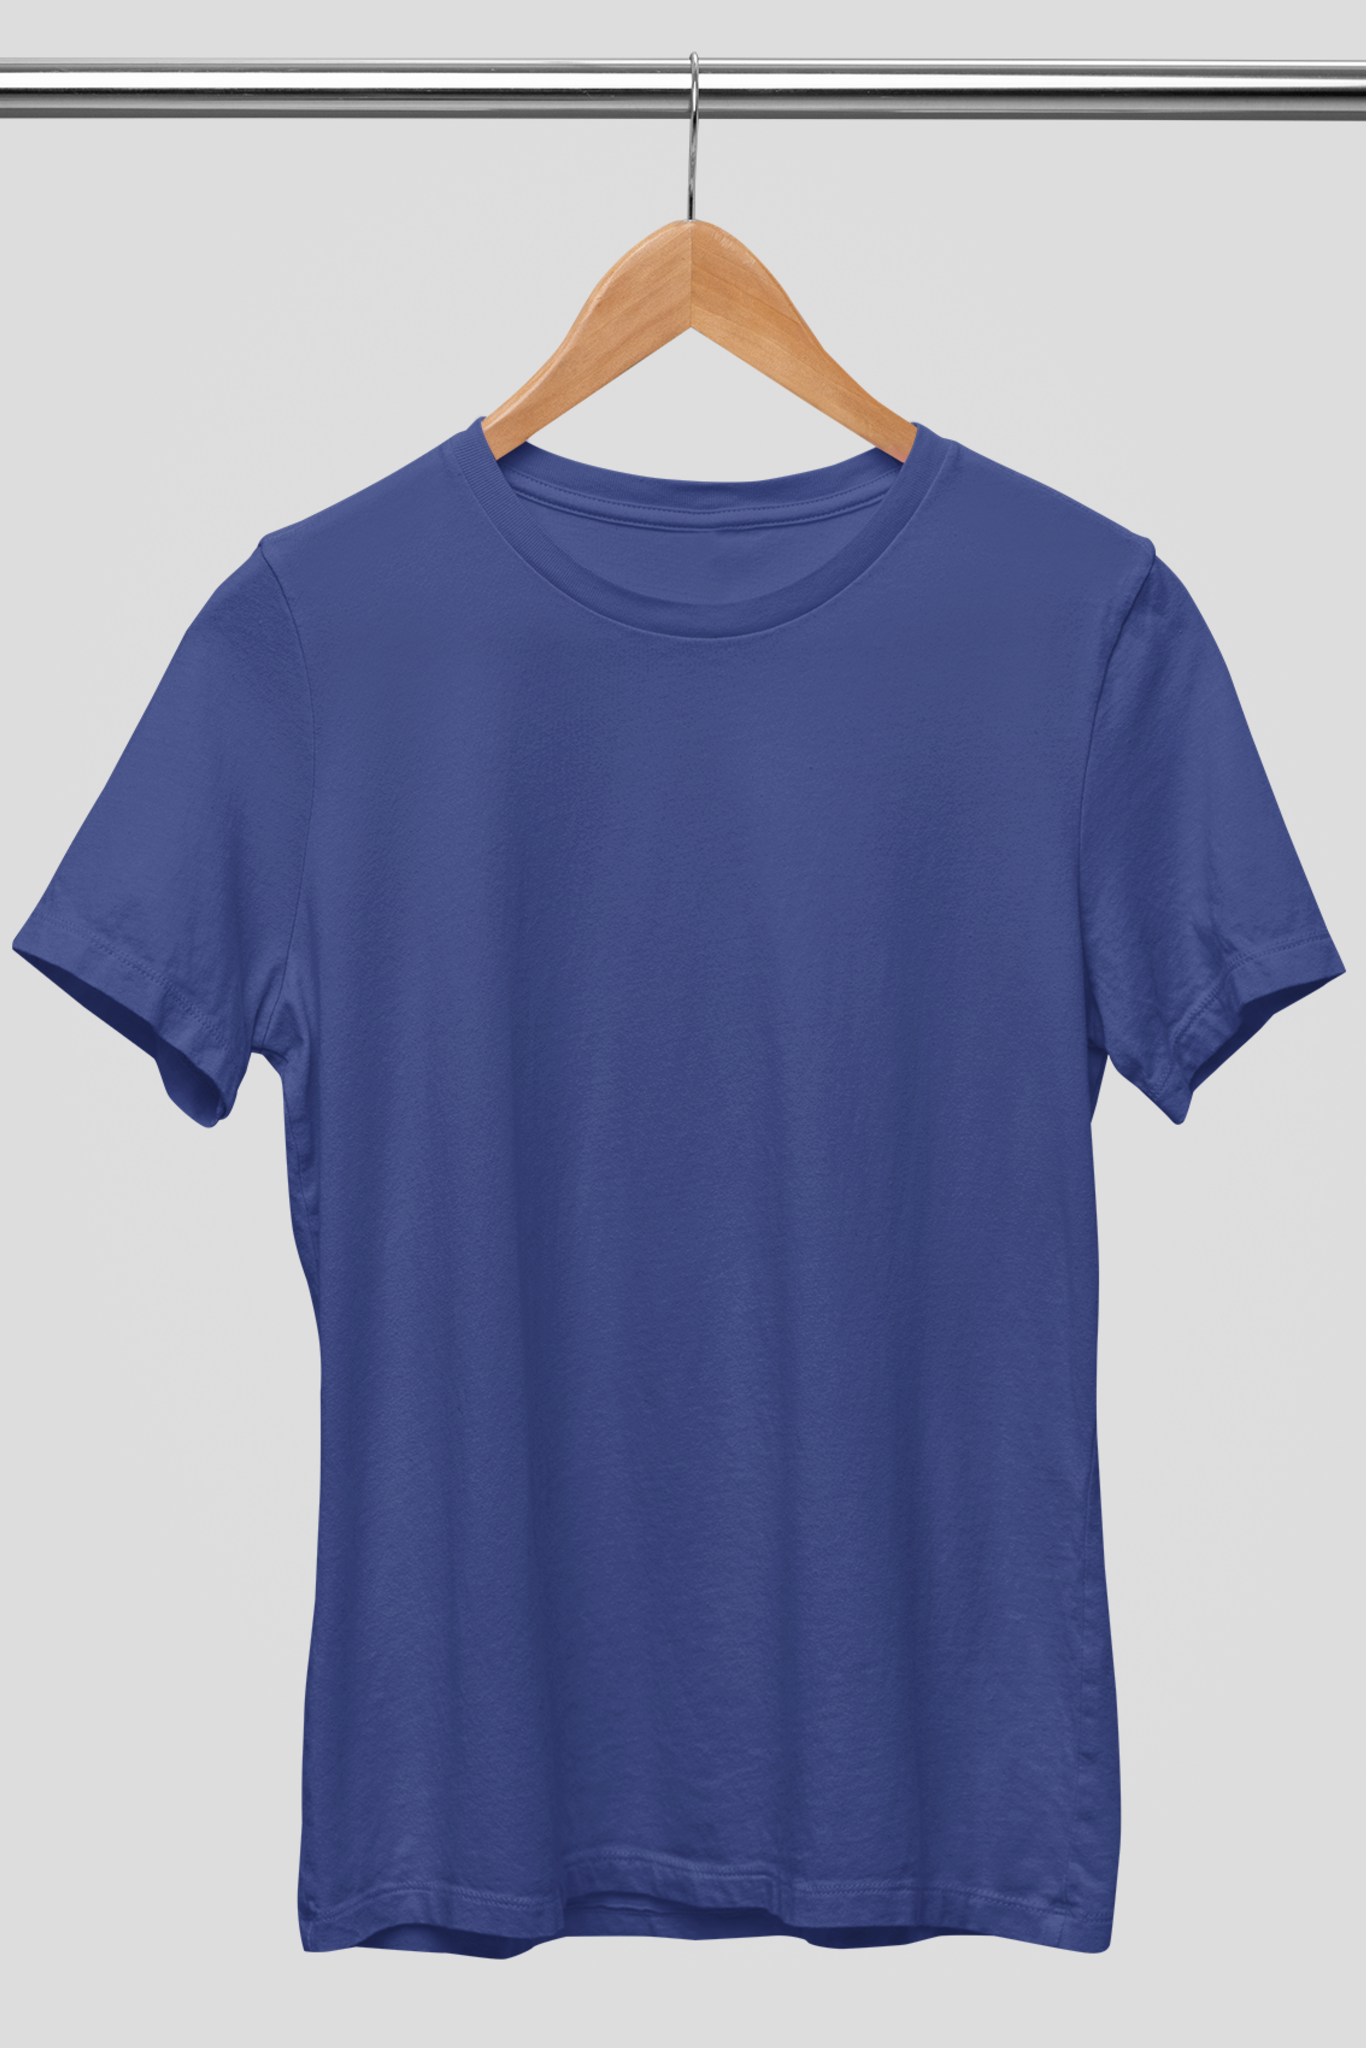 Men's Round Neck: Navy Blue T-Shirt - Ayuda Homes